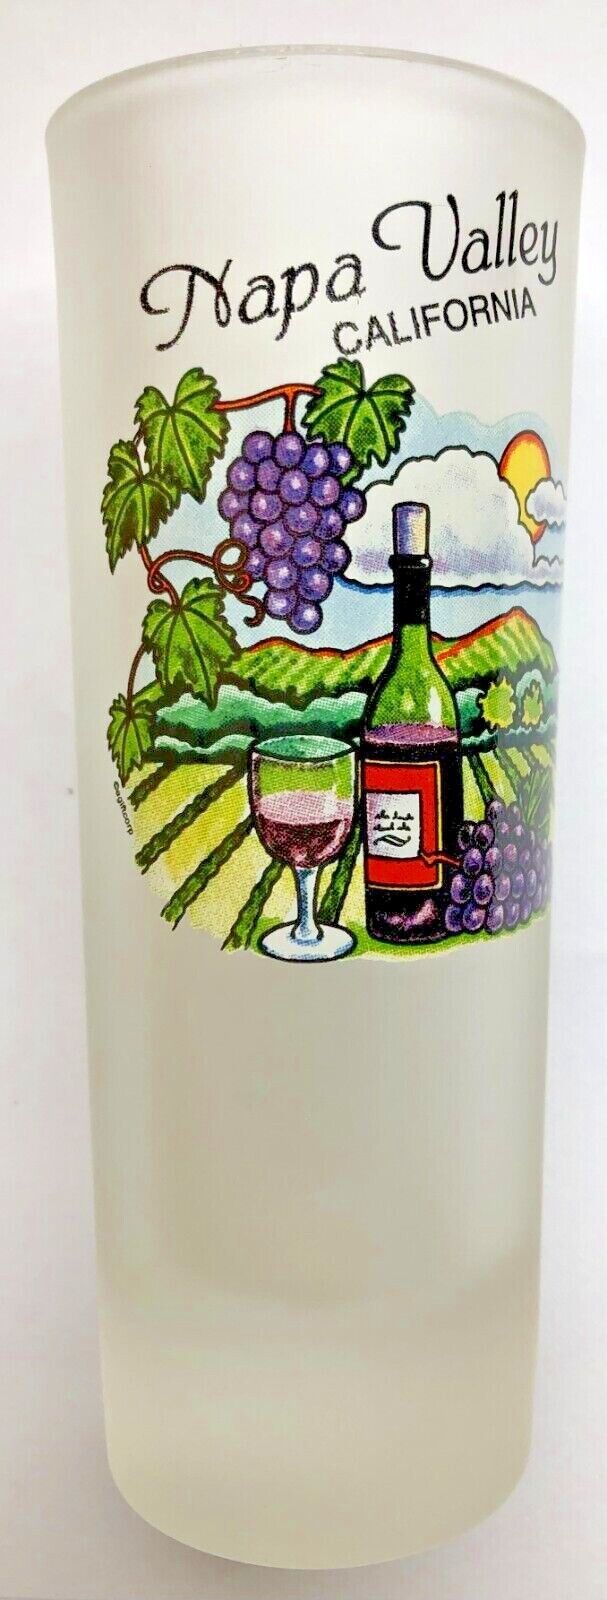 Napa Valley California Vineyards and Wineries Souvenir Shooter Shot Glass